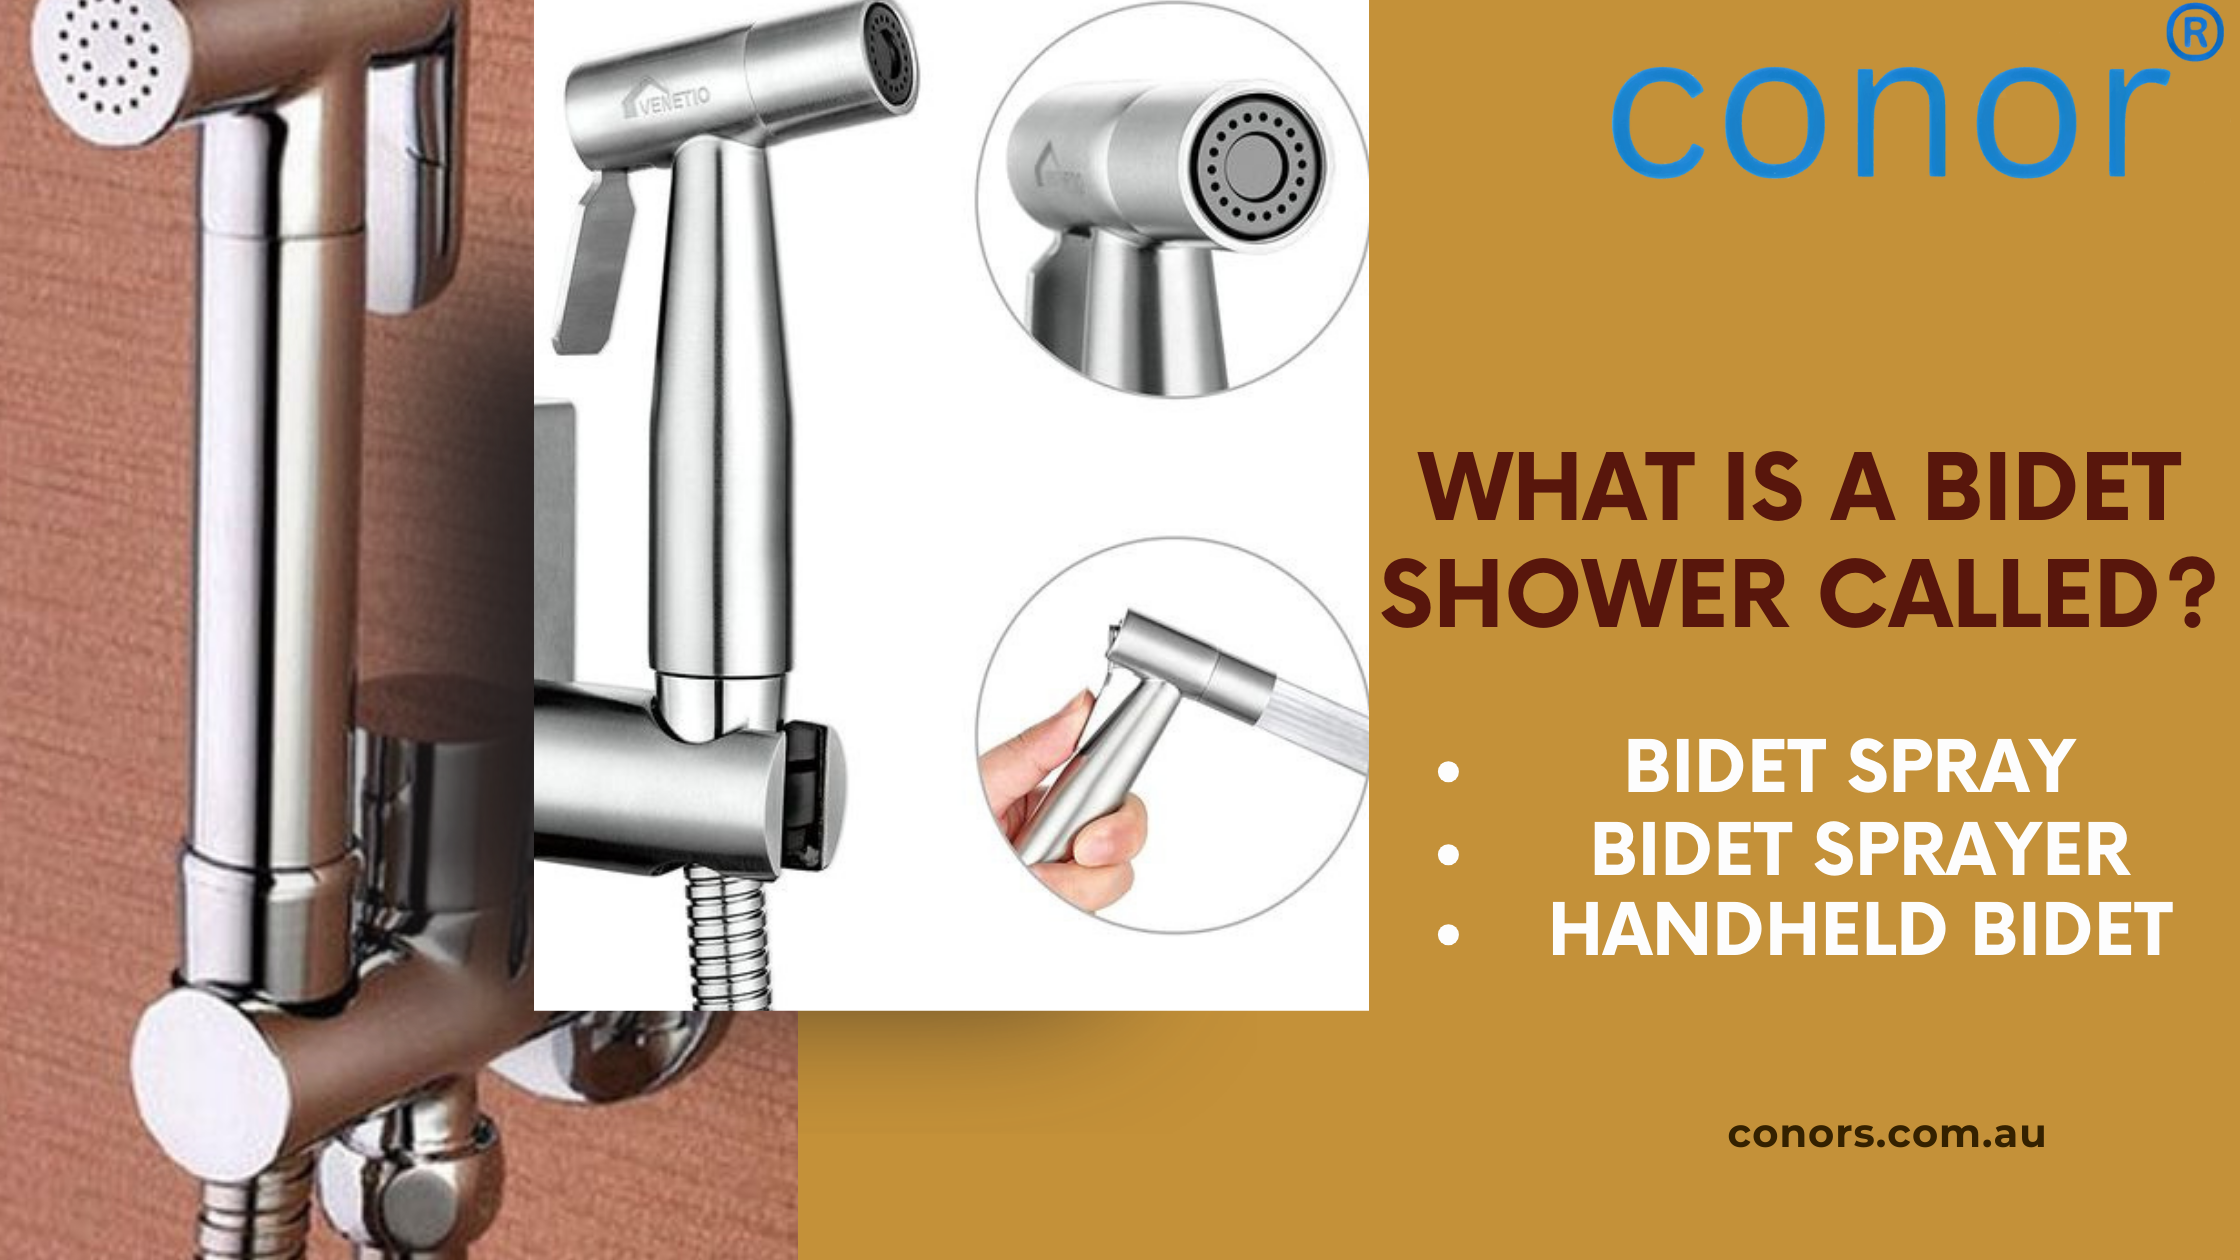 What is bidet shower called?